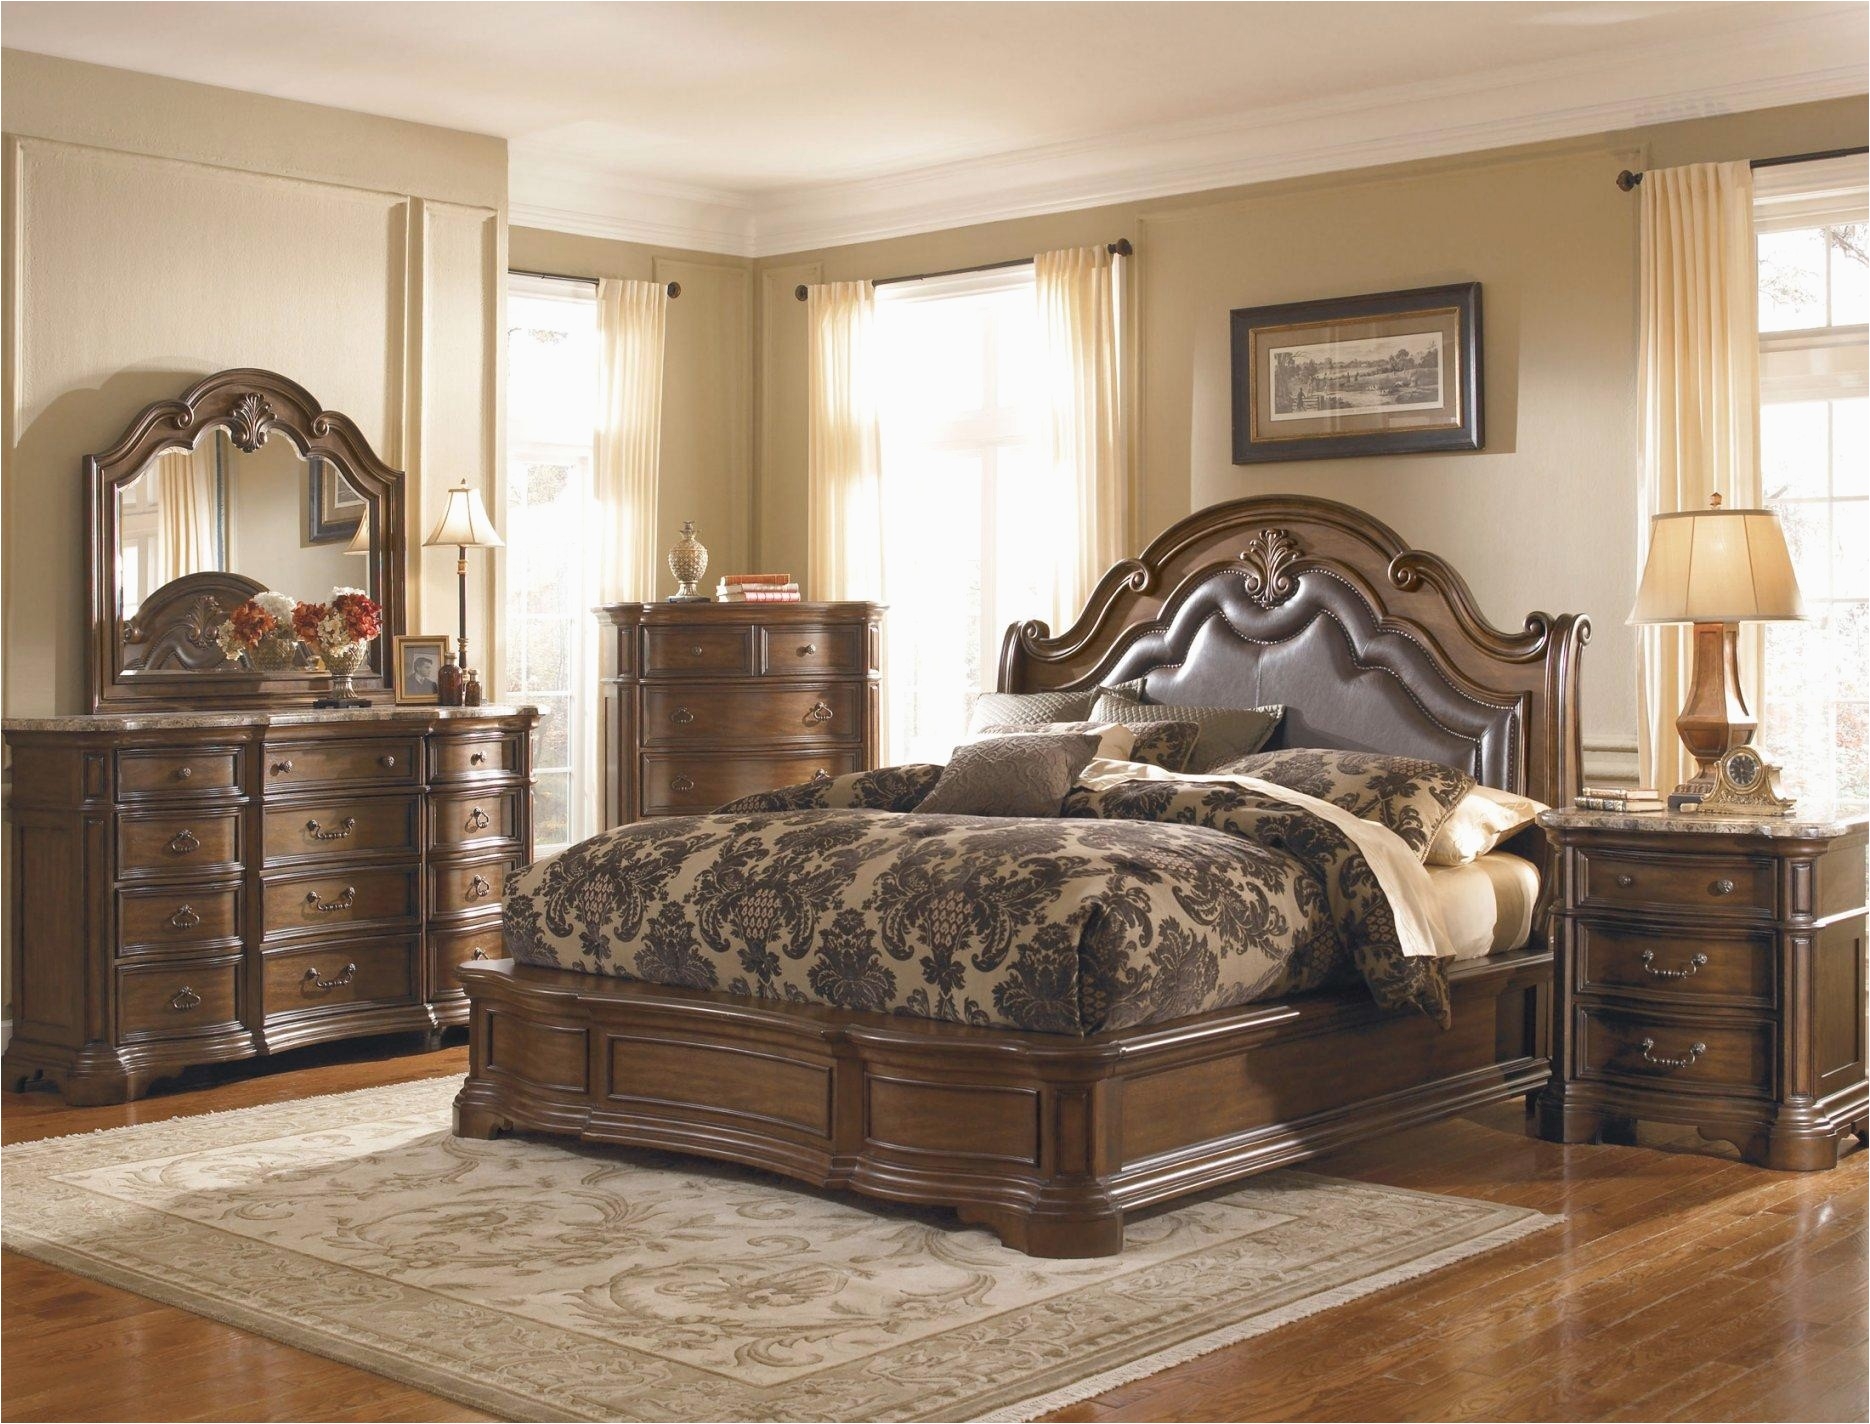 furniture conns bedroom furniture lovely sypialnia styl minimalistyczny zdjaa¢a¢cie od ikea sypialnia